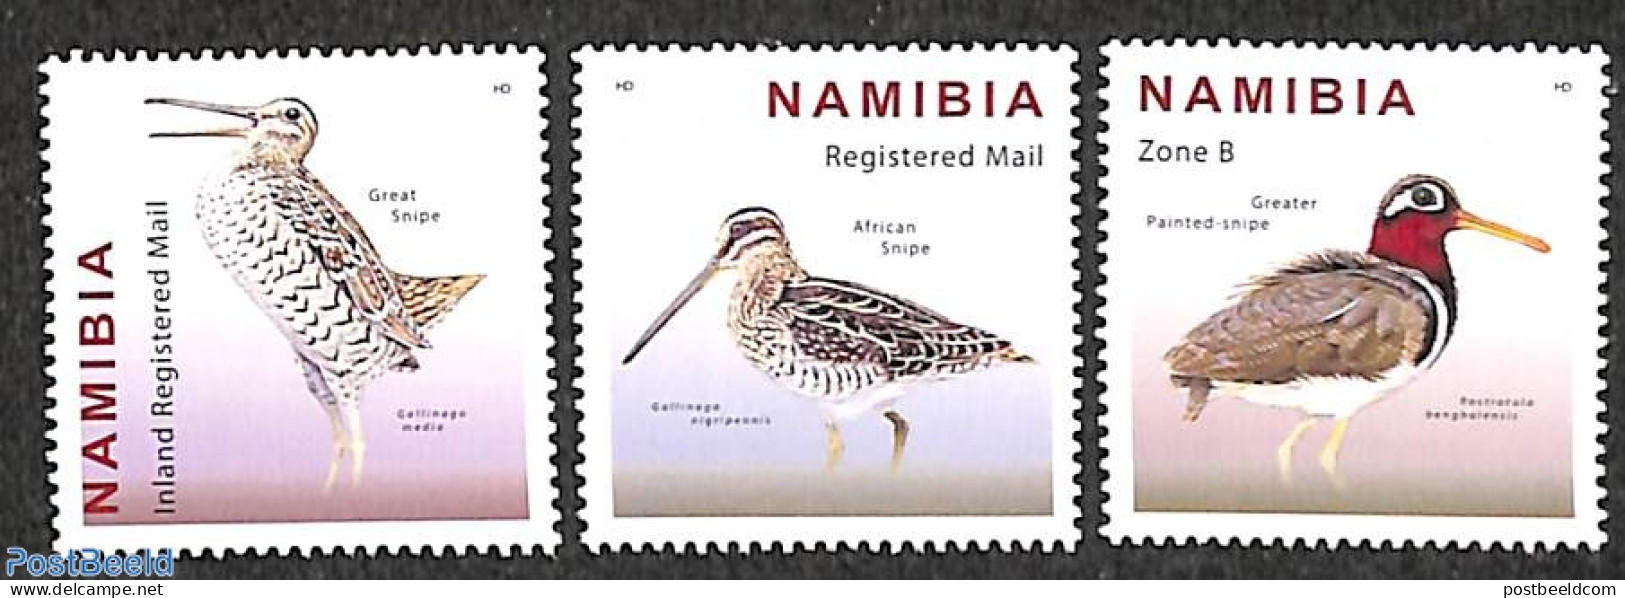 Namibia 2021 Birds 3v, Mint NH, Nature - Birds - Namibië (1990- ...)